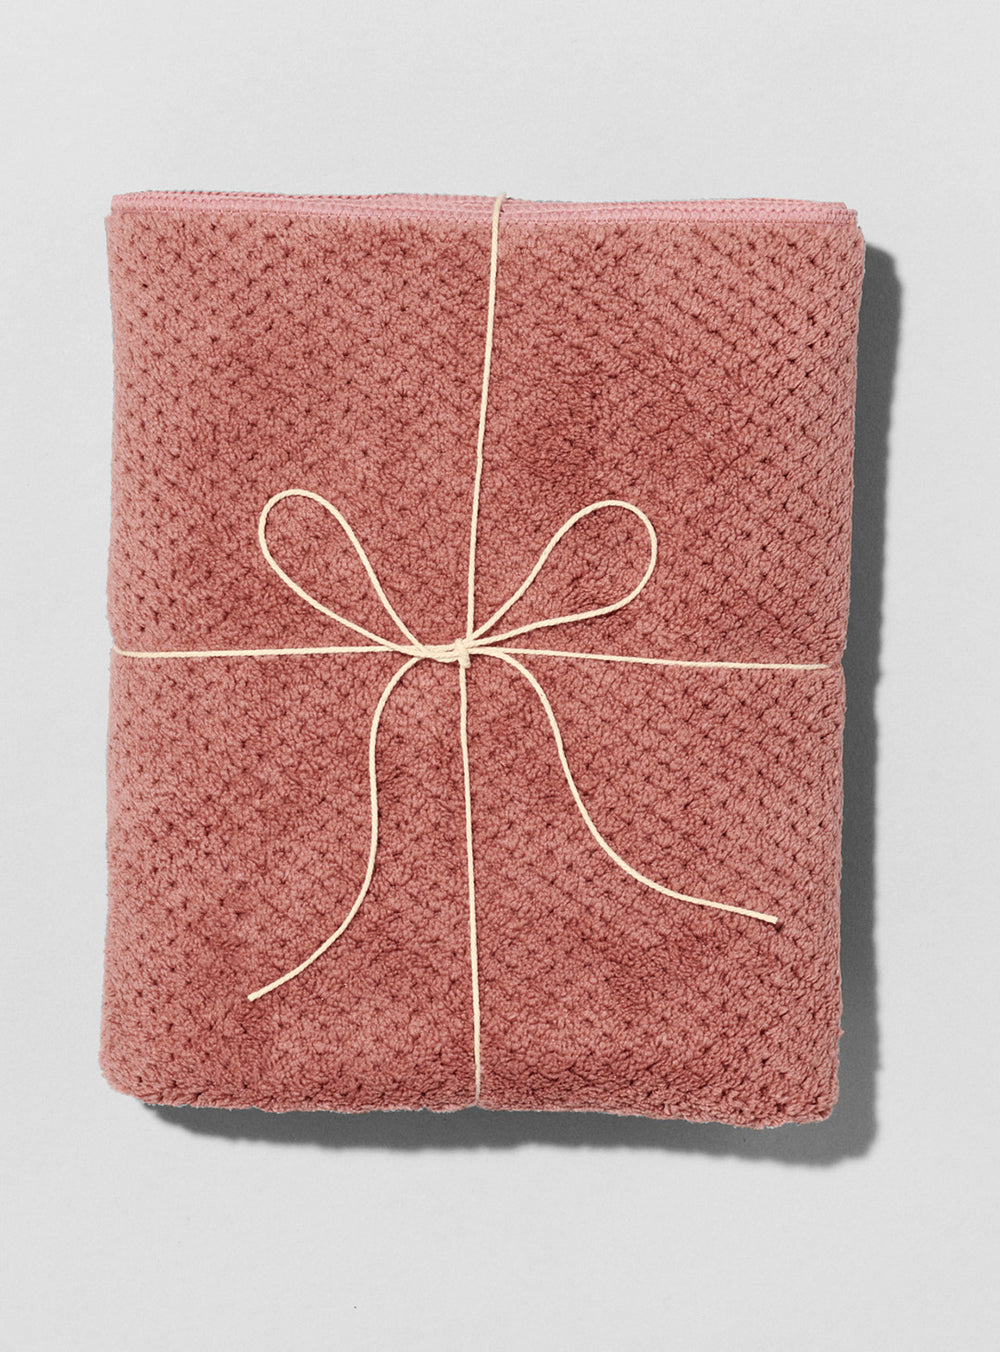 Softees Plush Microfiber Towels - 6 Pack - Terracotta